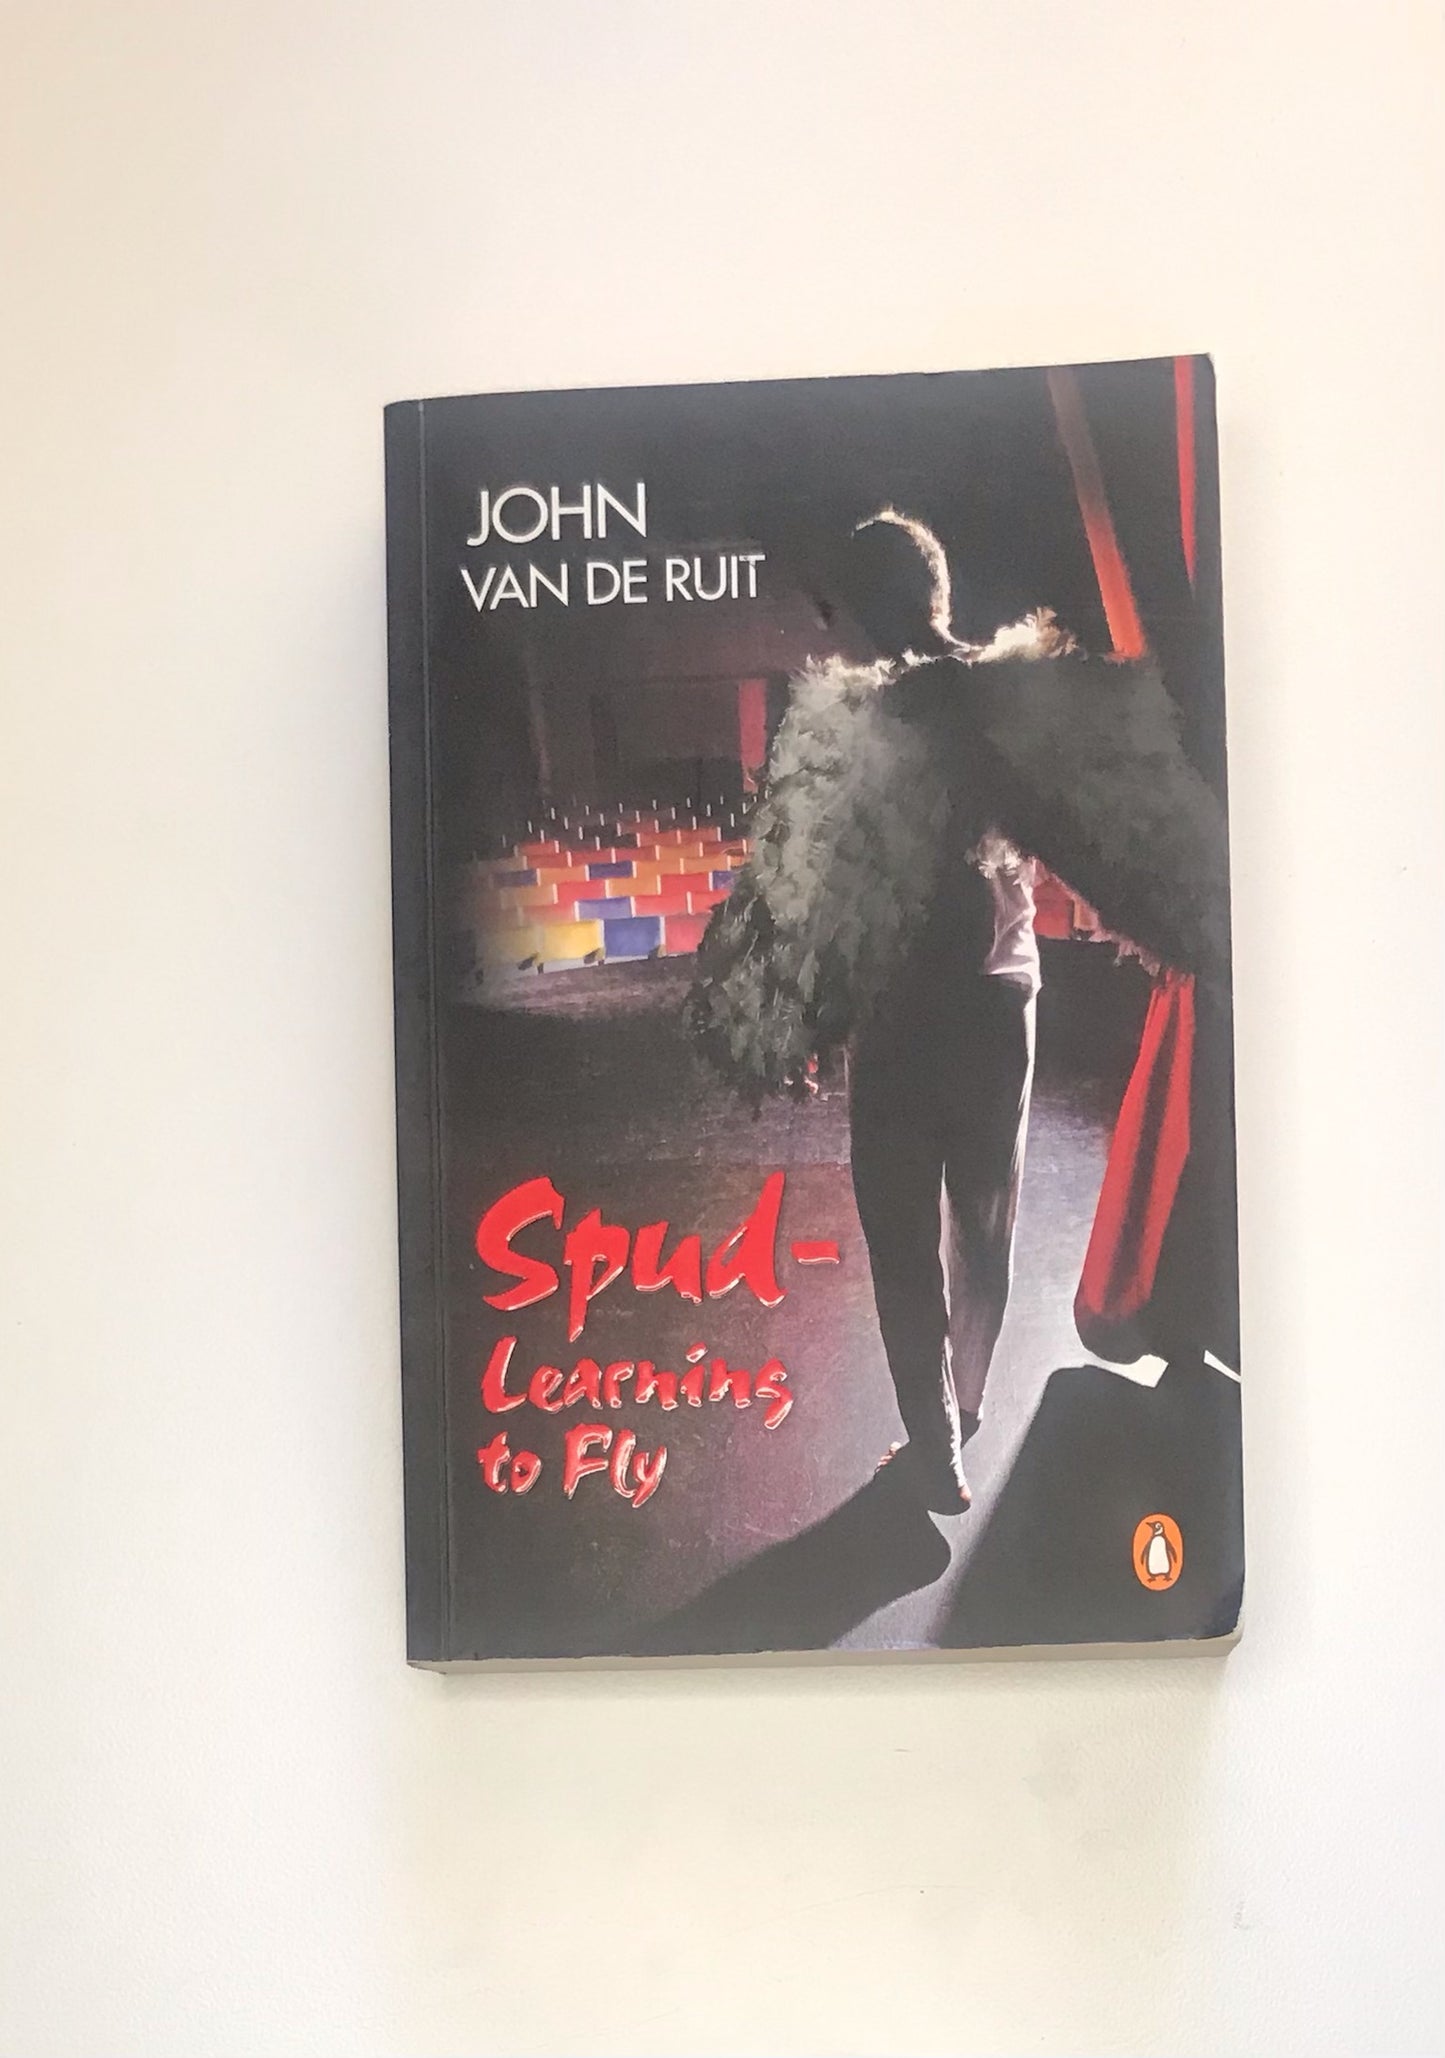 Spud - Learning to fly - John van de Ruit (Signed)